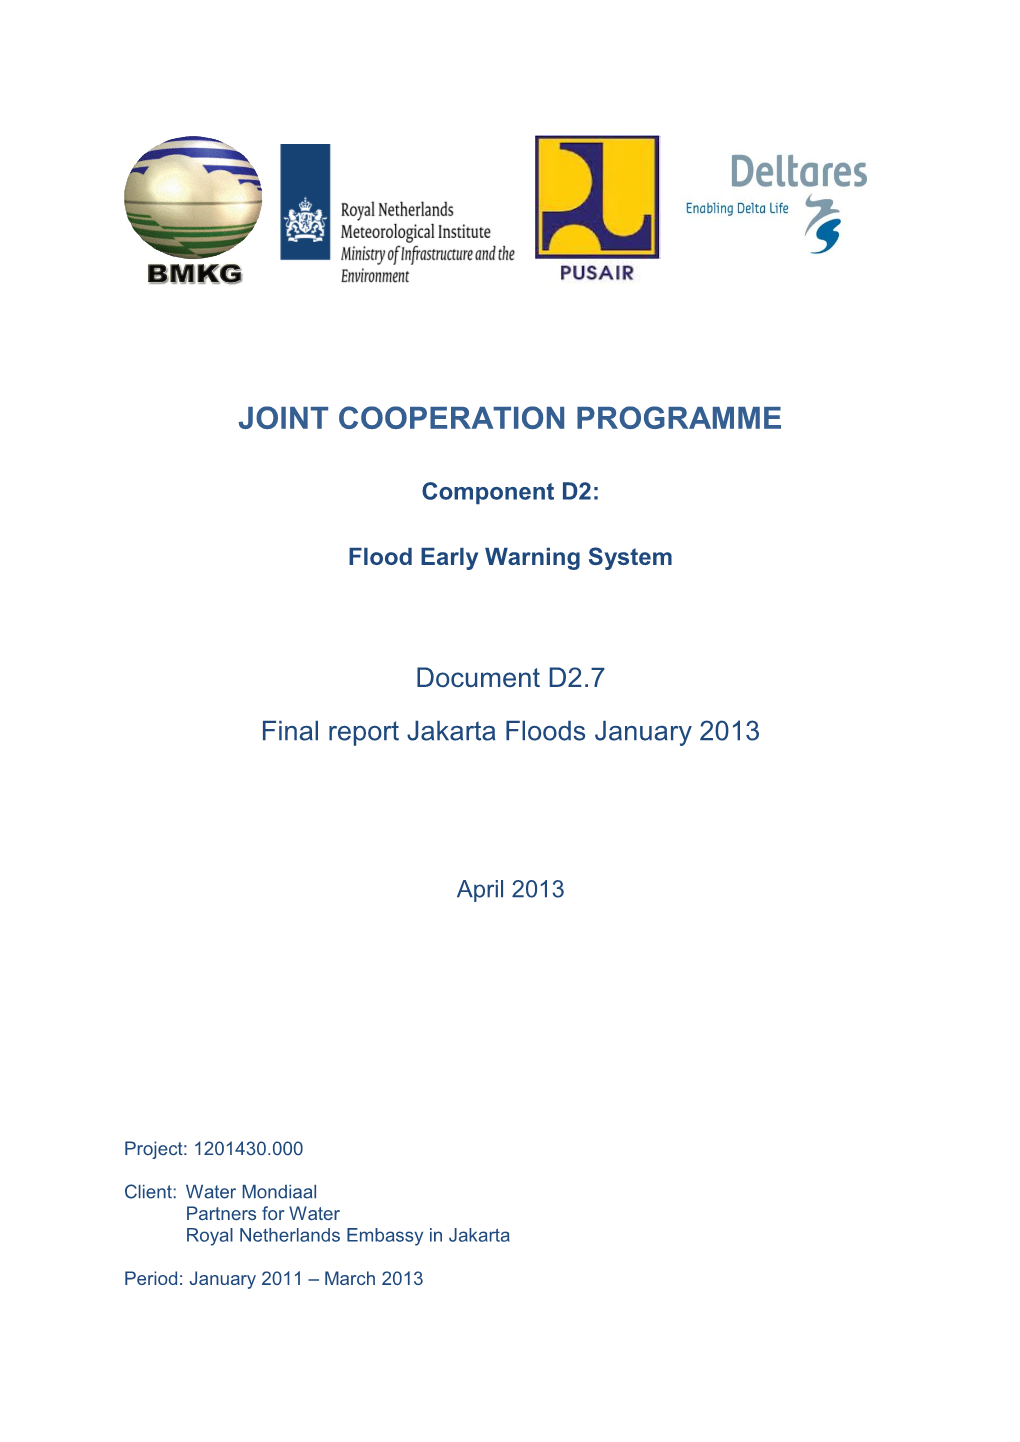 Final Report Jakarta Floods January 2013, April